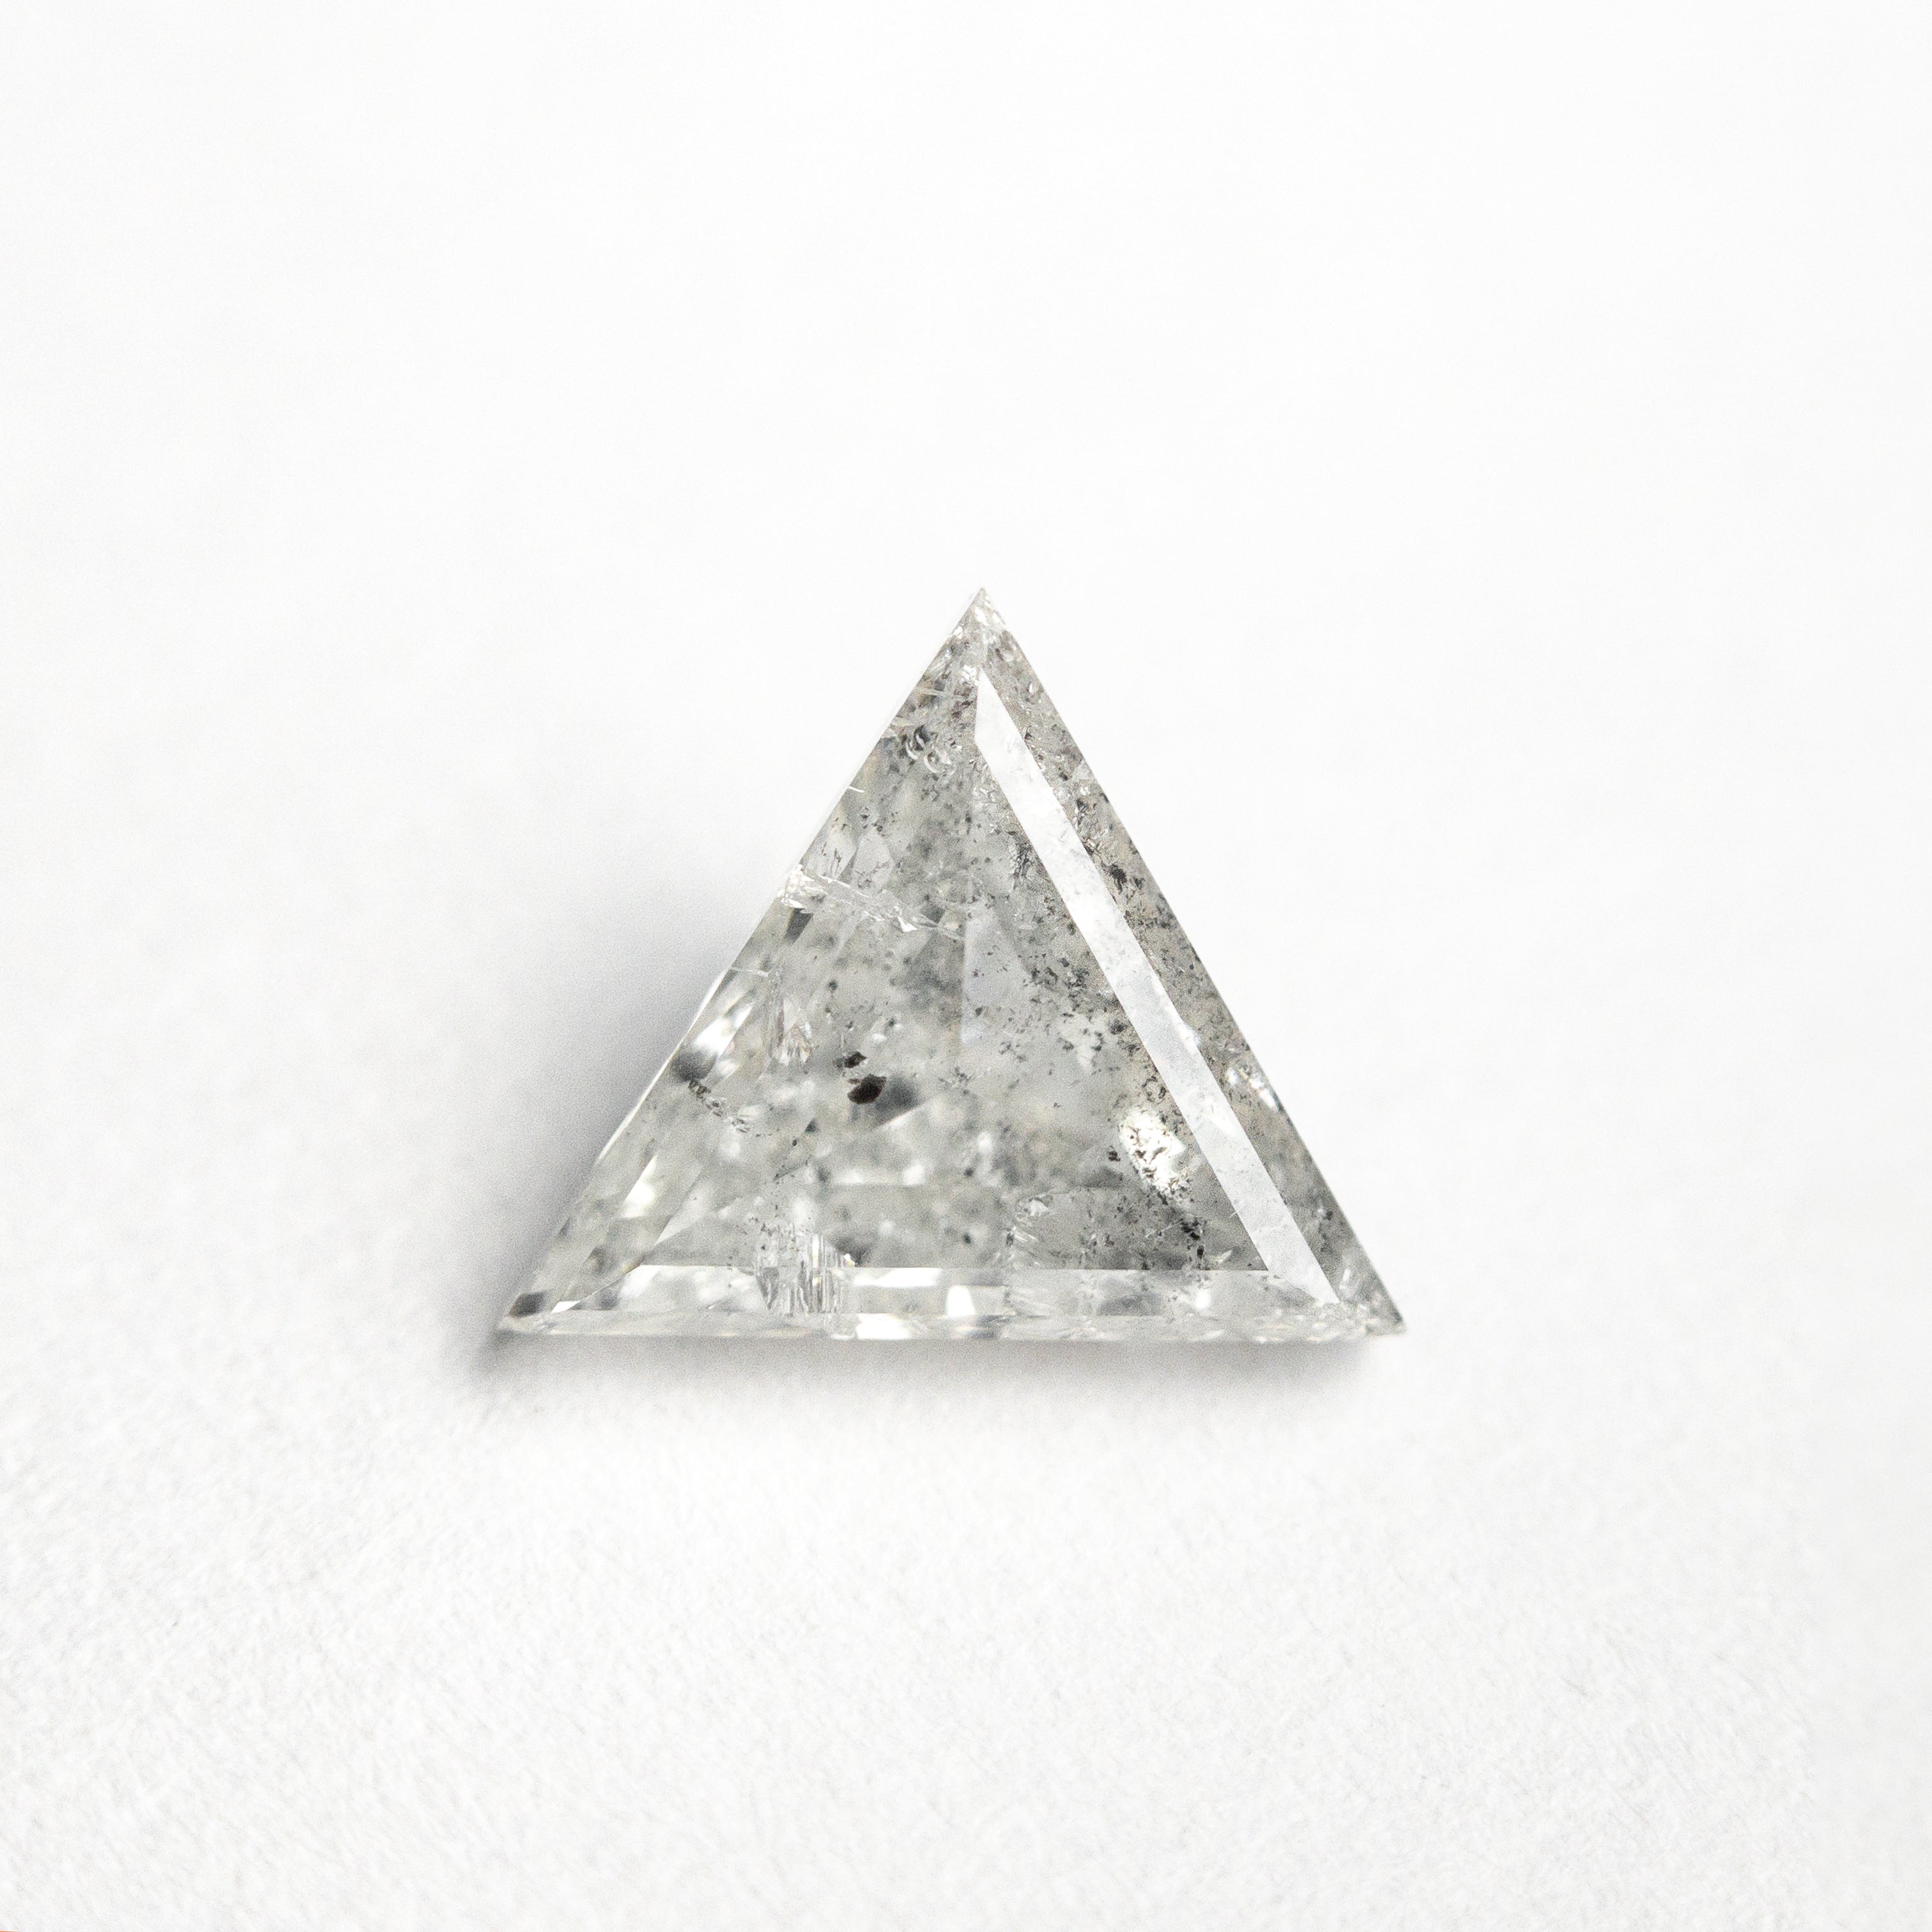 Salt and Pepper Step Cut Diamond - 1.09ct Triangle - Foe & Dear